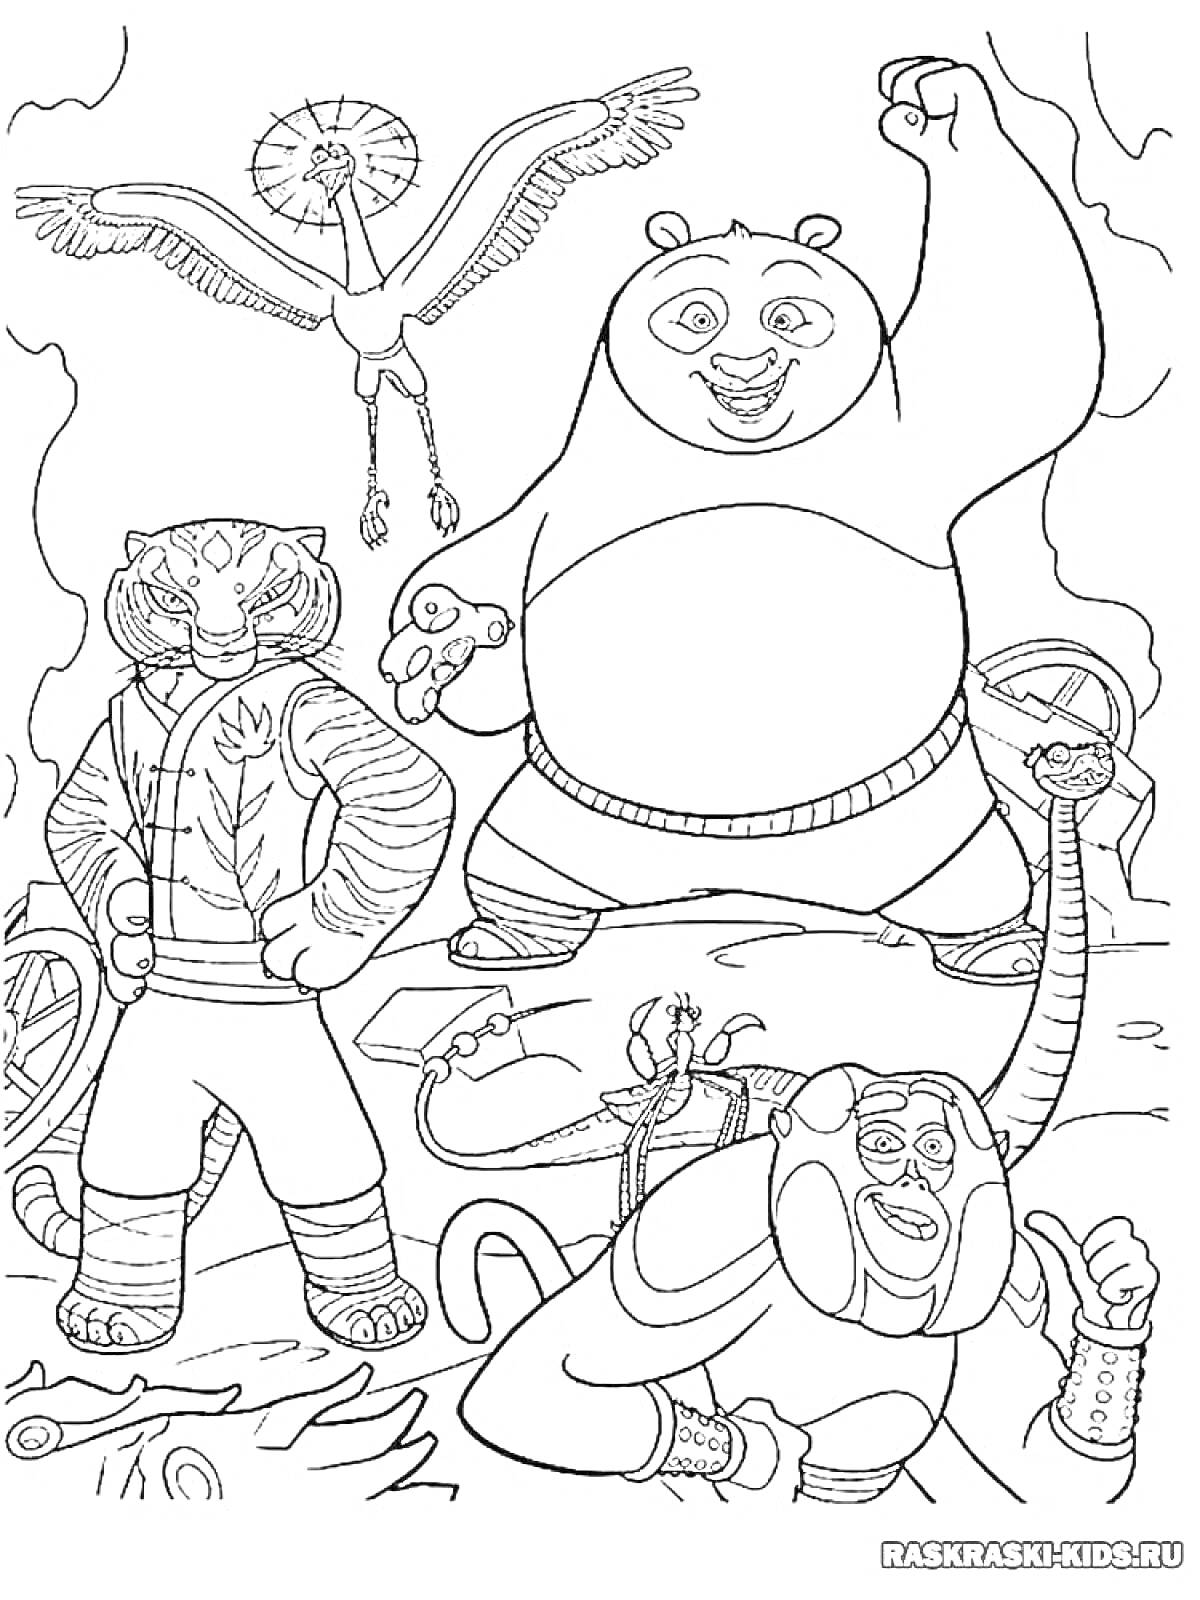 На раскраске изображено: Кунг-фу панда, Тигрица, Журавль, Горы, Боевые позы